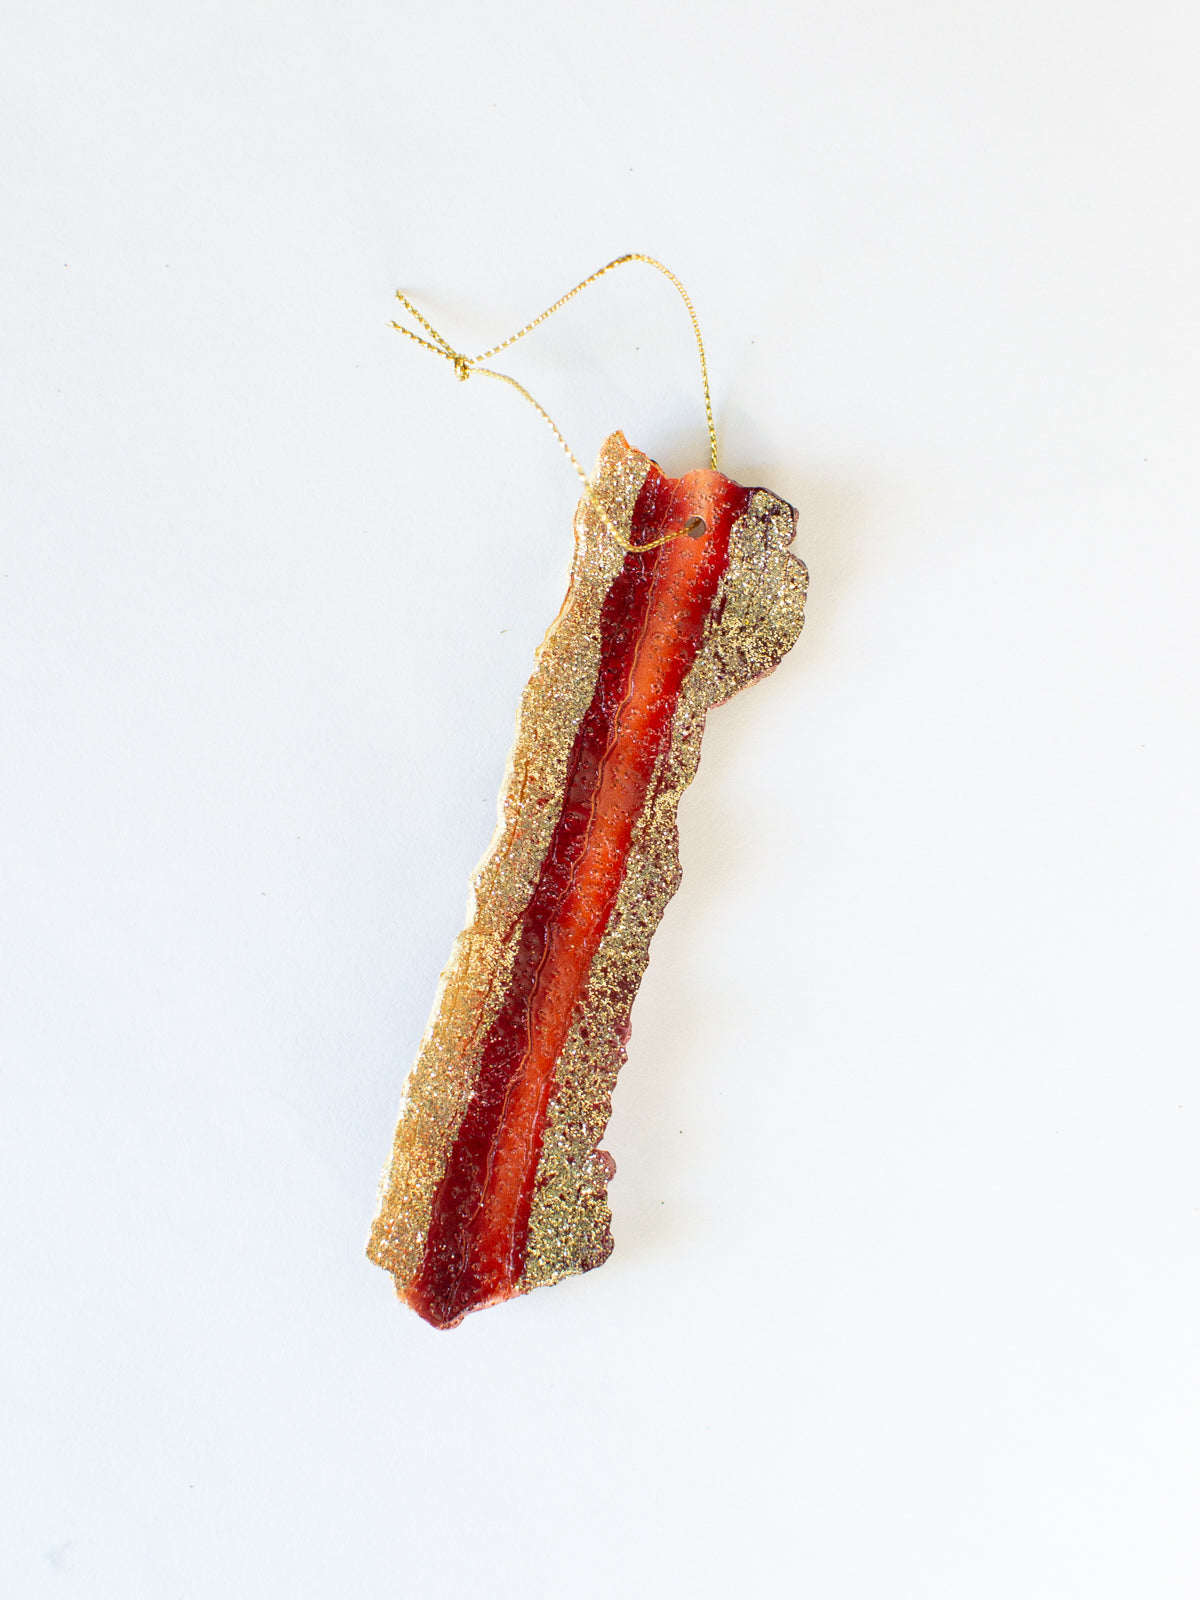 Crispy Bacon Ornament